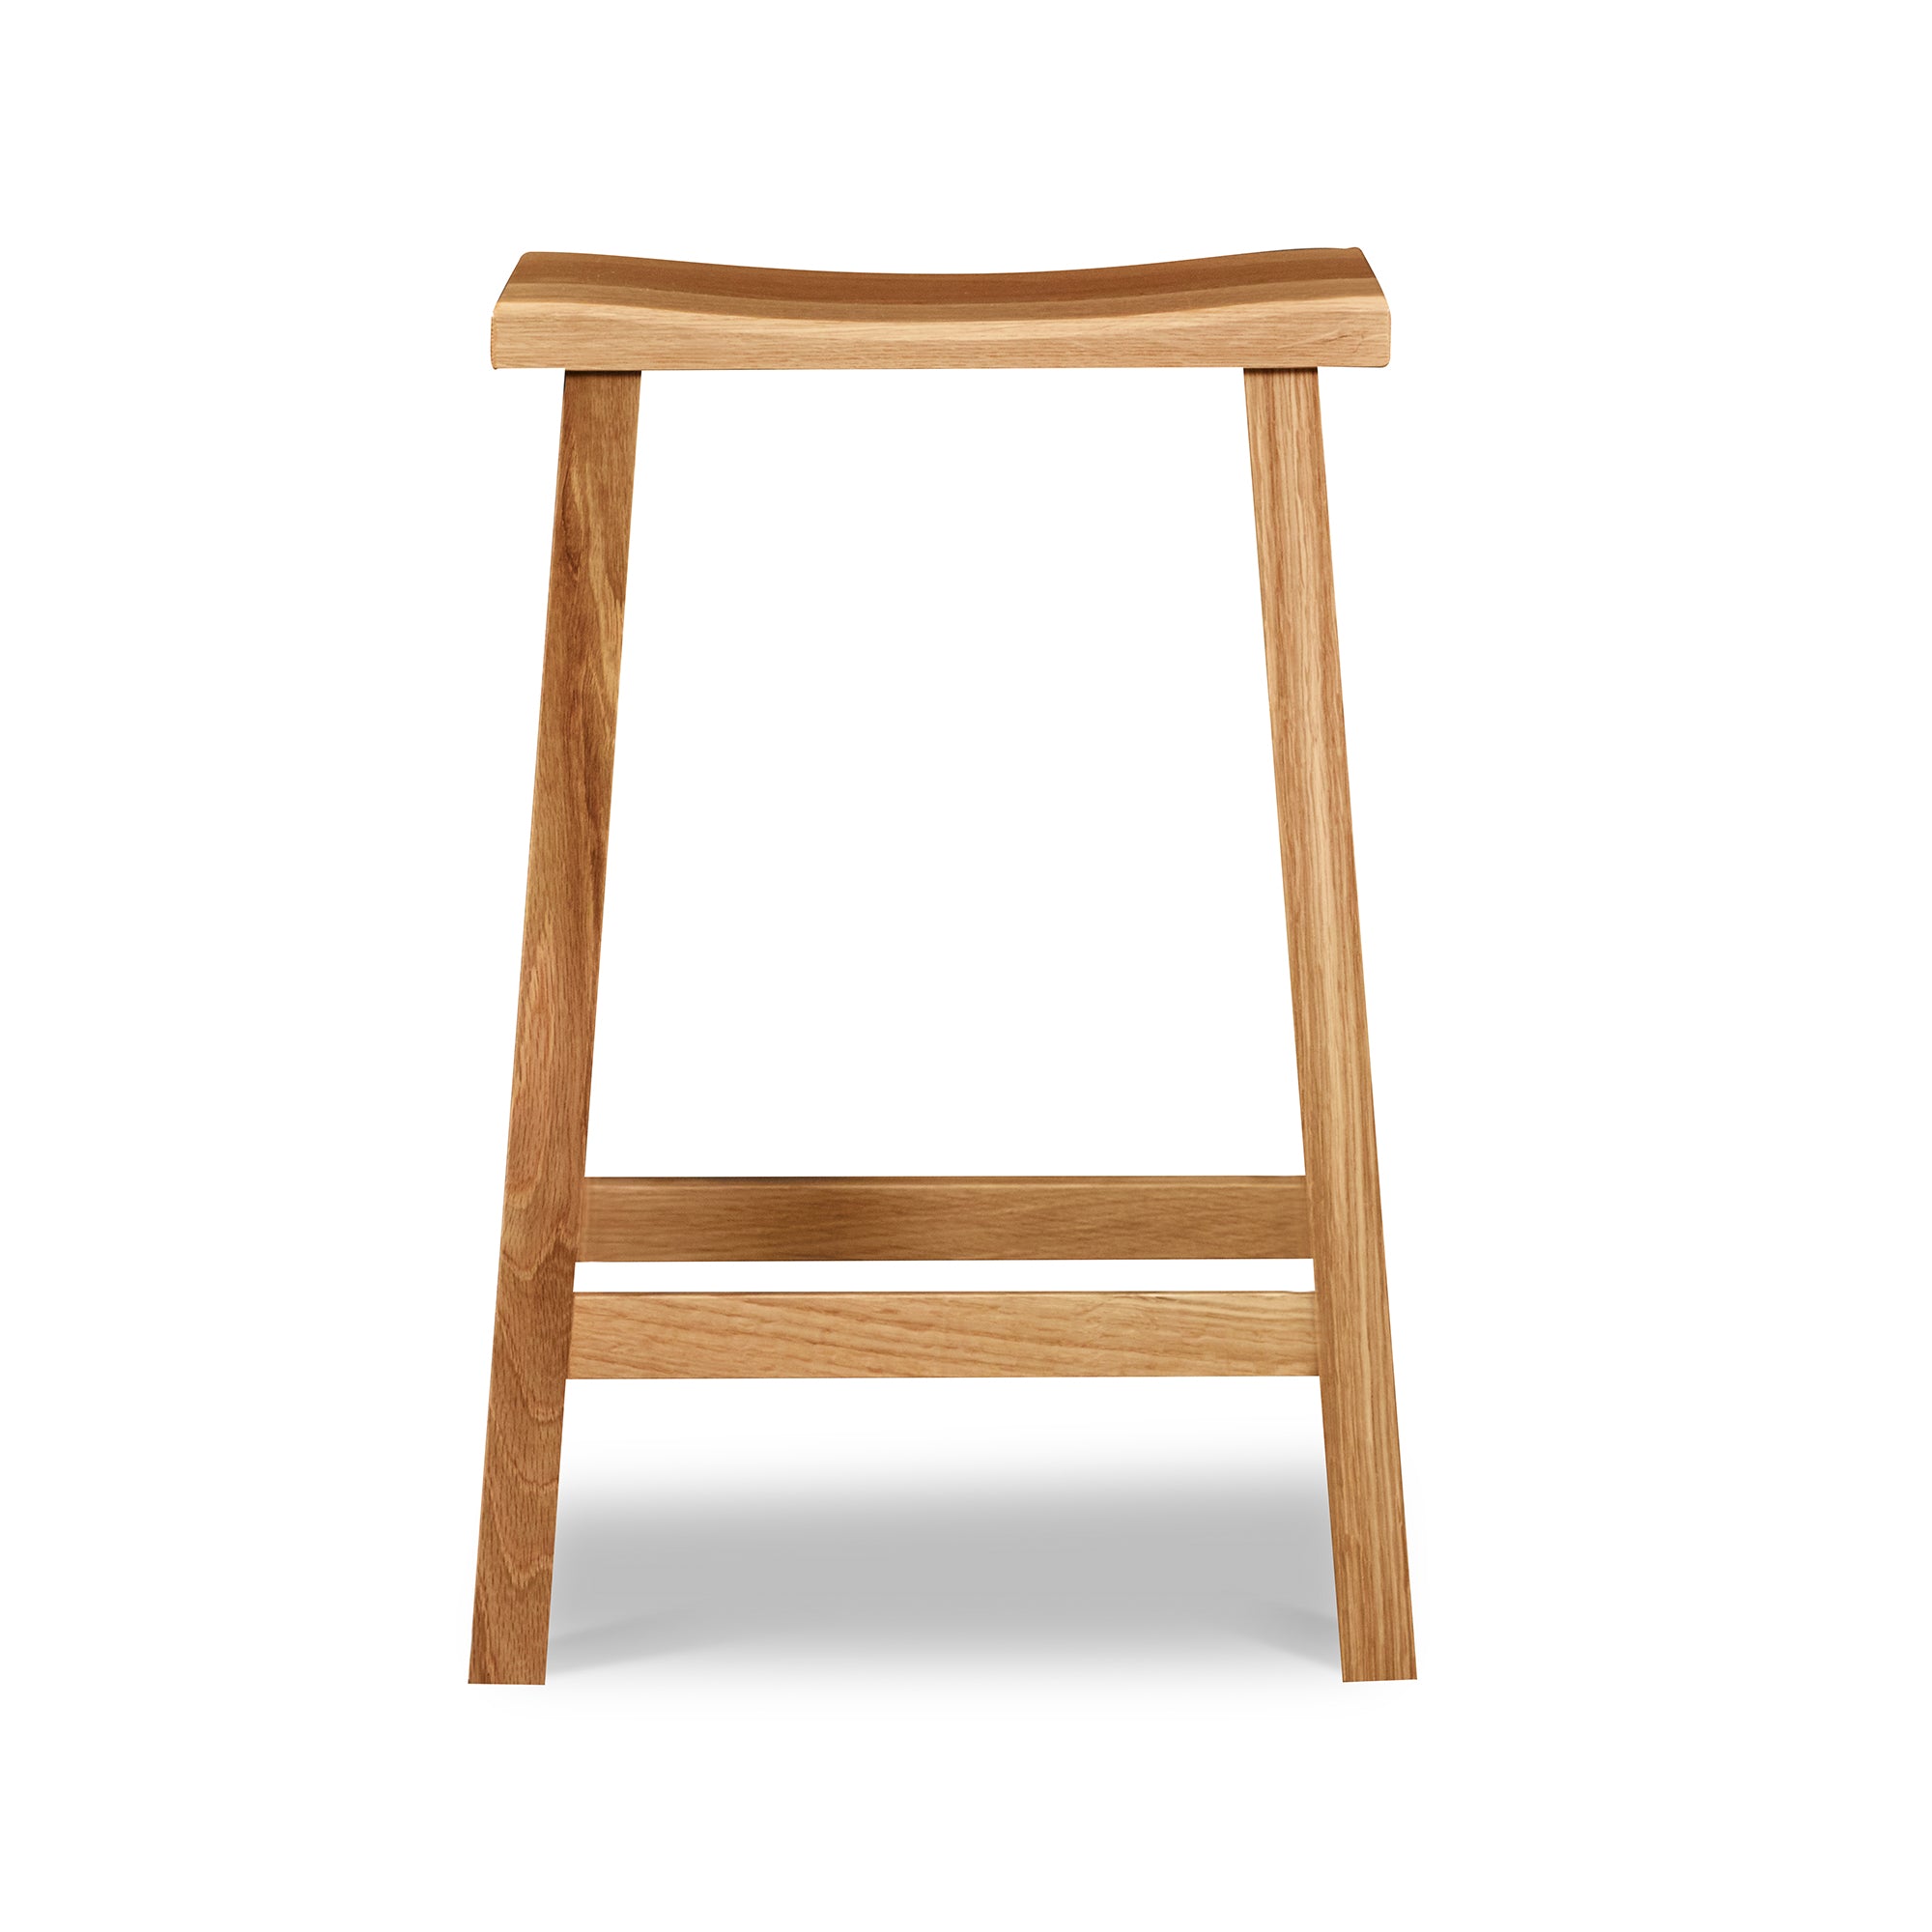 Simple white oak stool with rectangular seat